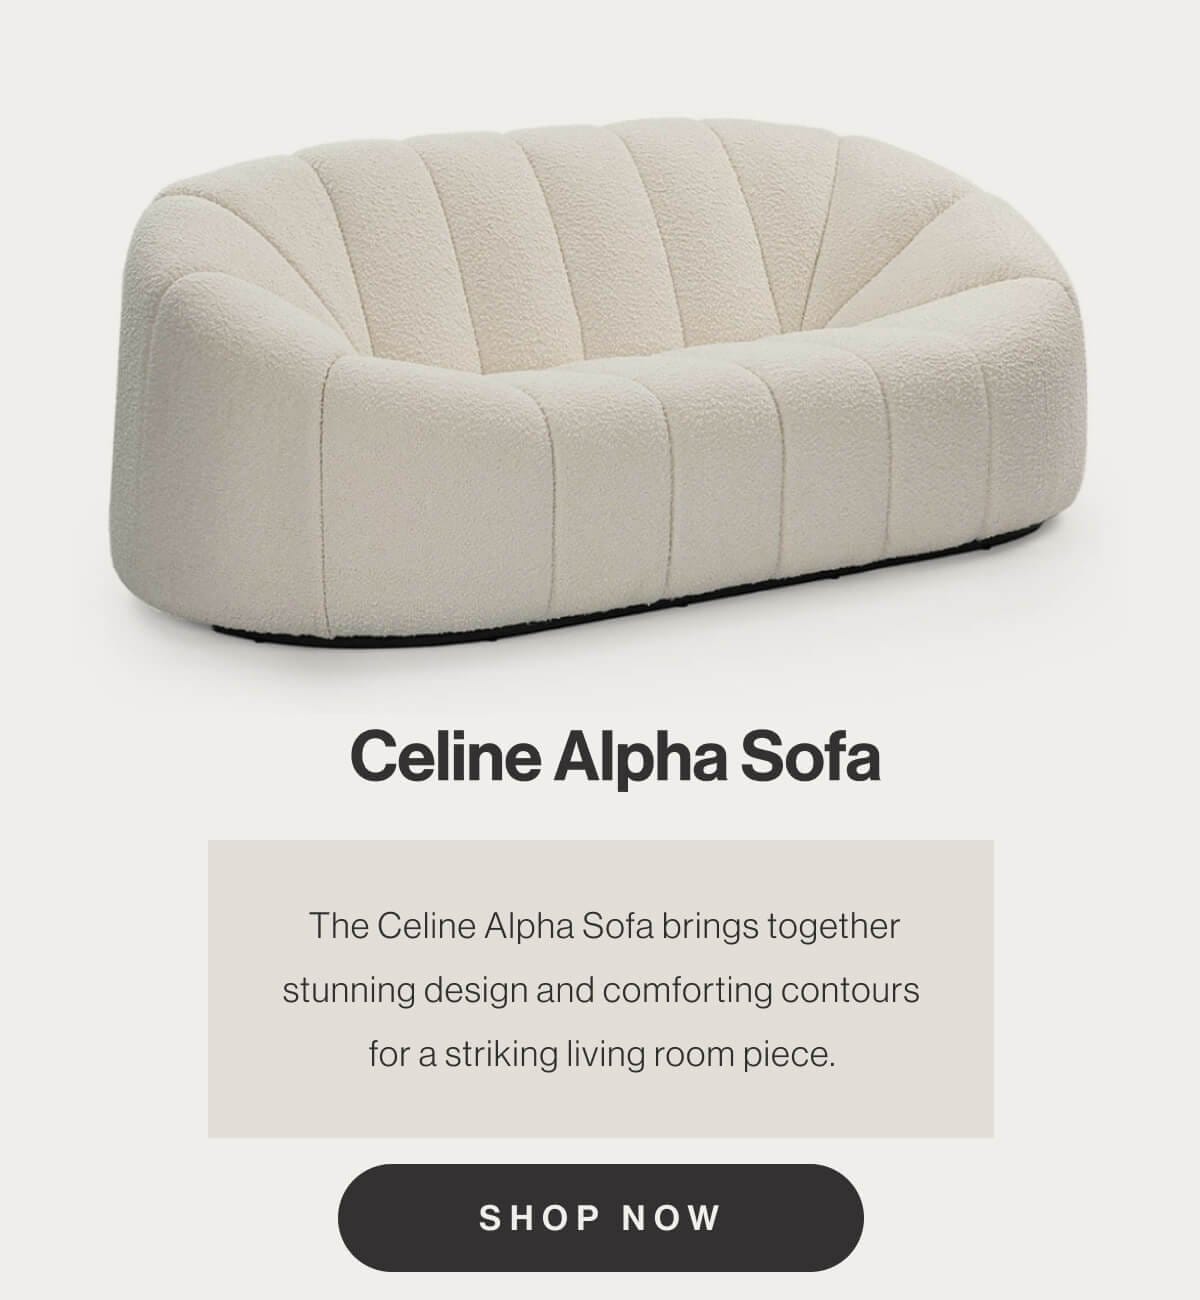 Celine Alpha Sofa - The Celine Alpha Sofa brings together stunning design and comforting contours for a striking living room piece. - Shop now